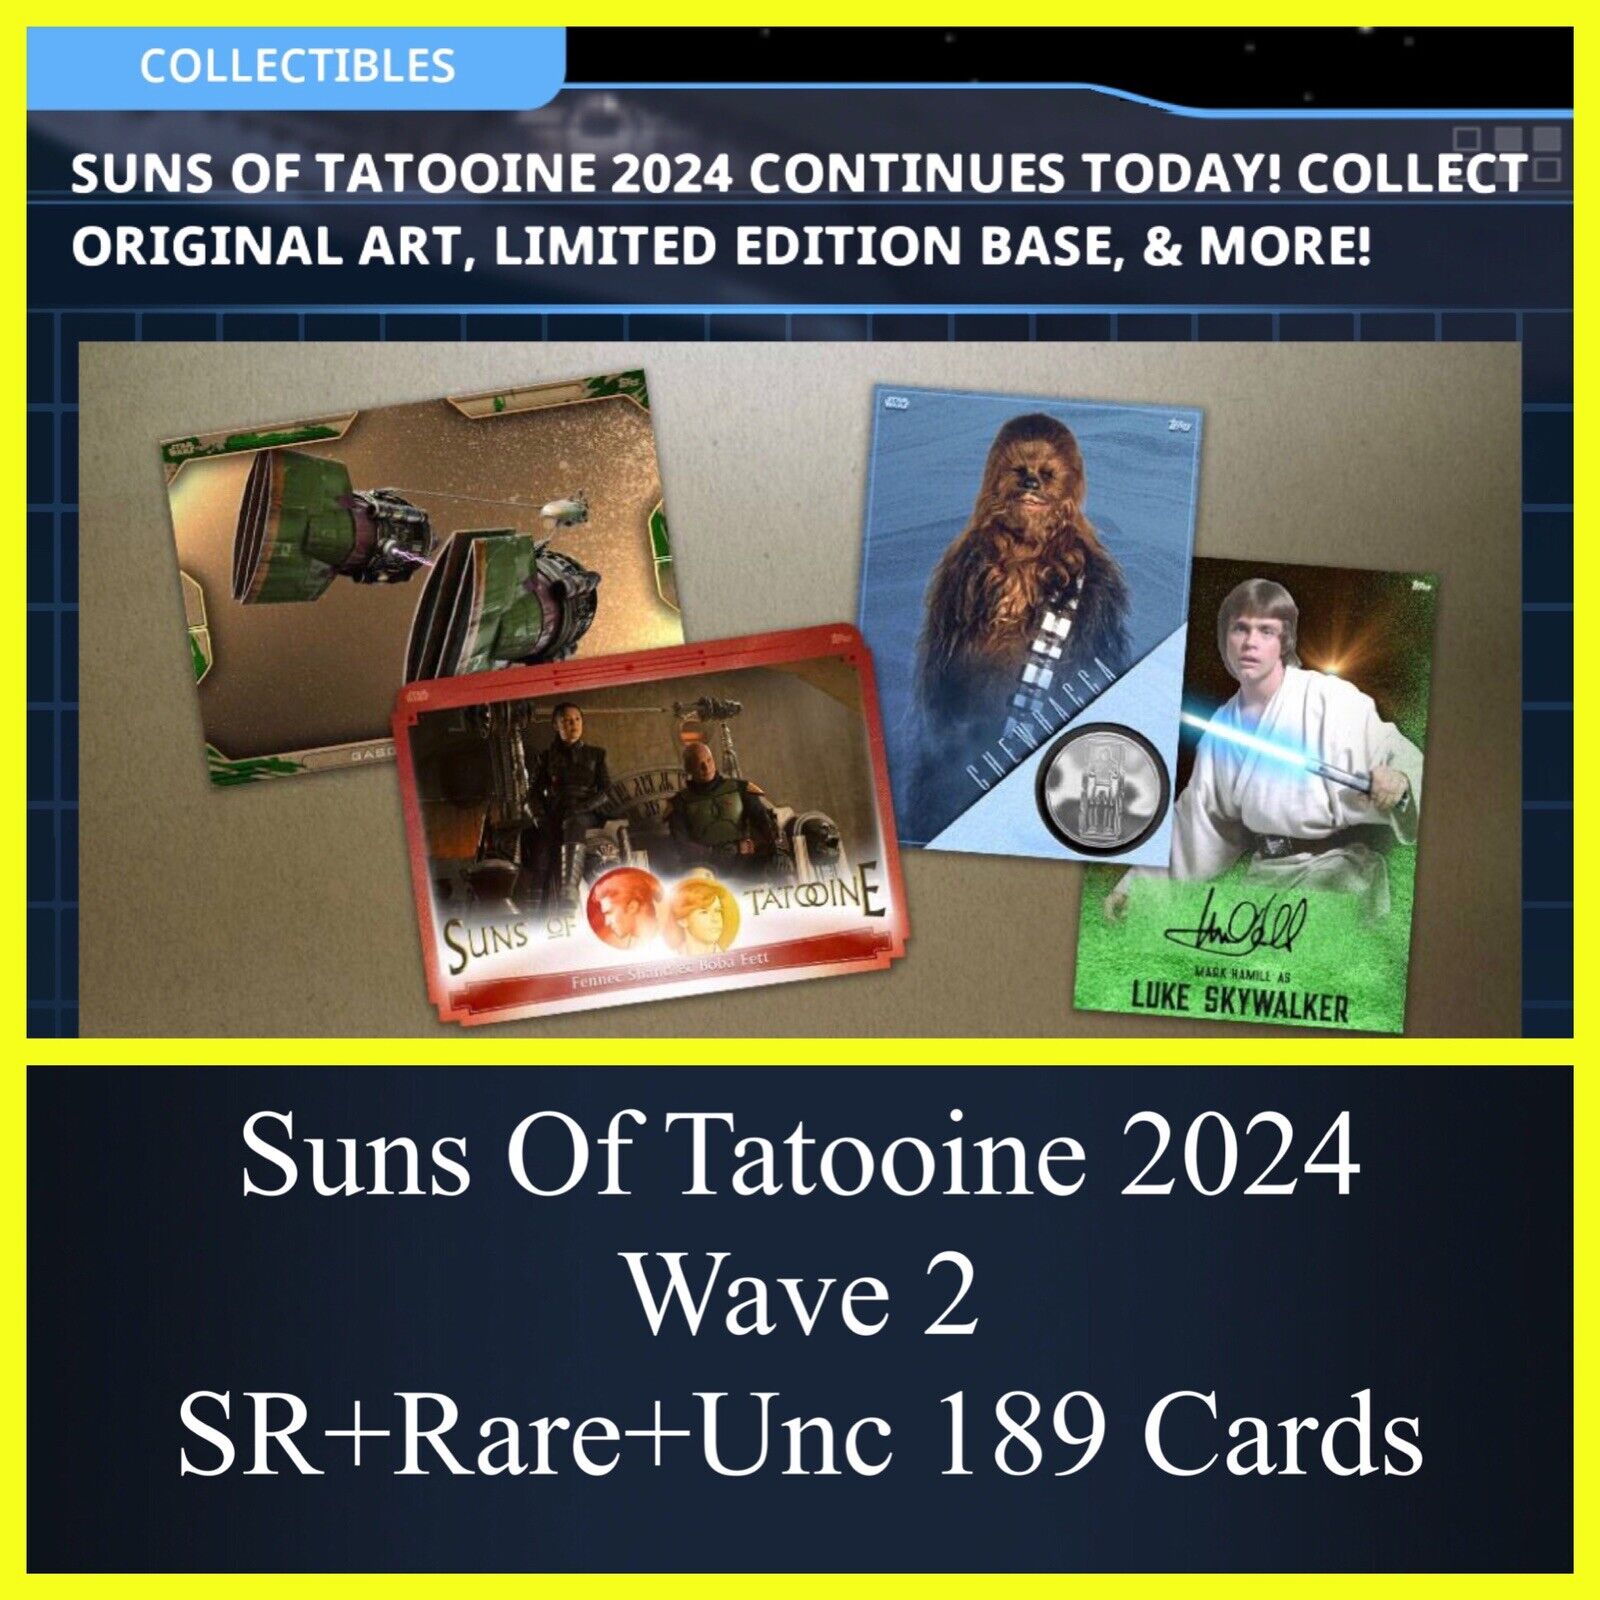 SUNS OF TATOOINE 2024 WAVE 2 SR+RARE+UN 189 CARD SET-TOPPS STAR WARS CARD TRADER